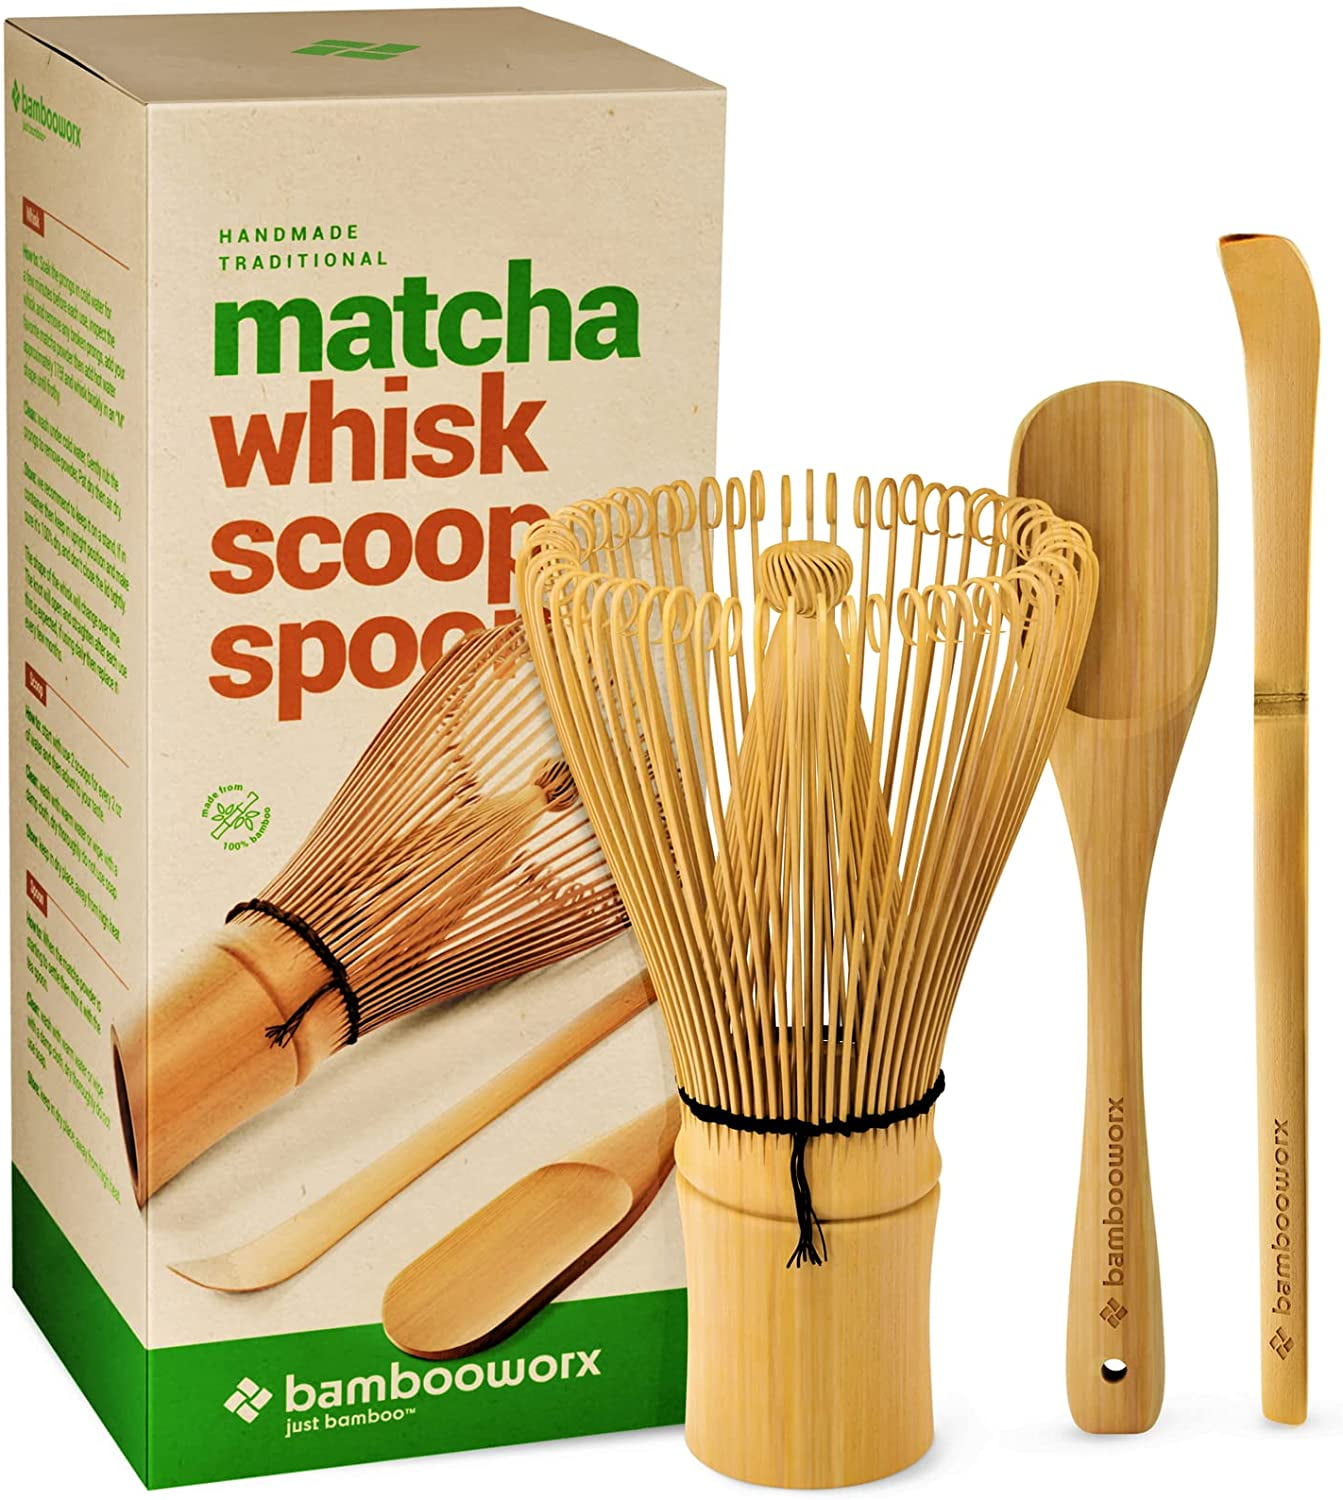 Tea Ceremony Chashaku Bamboo Scoop Matcha Tools/ Made in Japan 